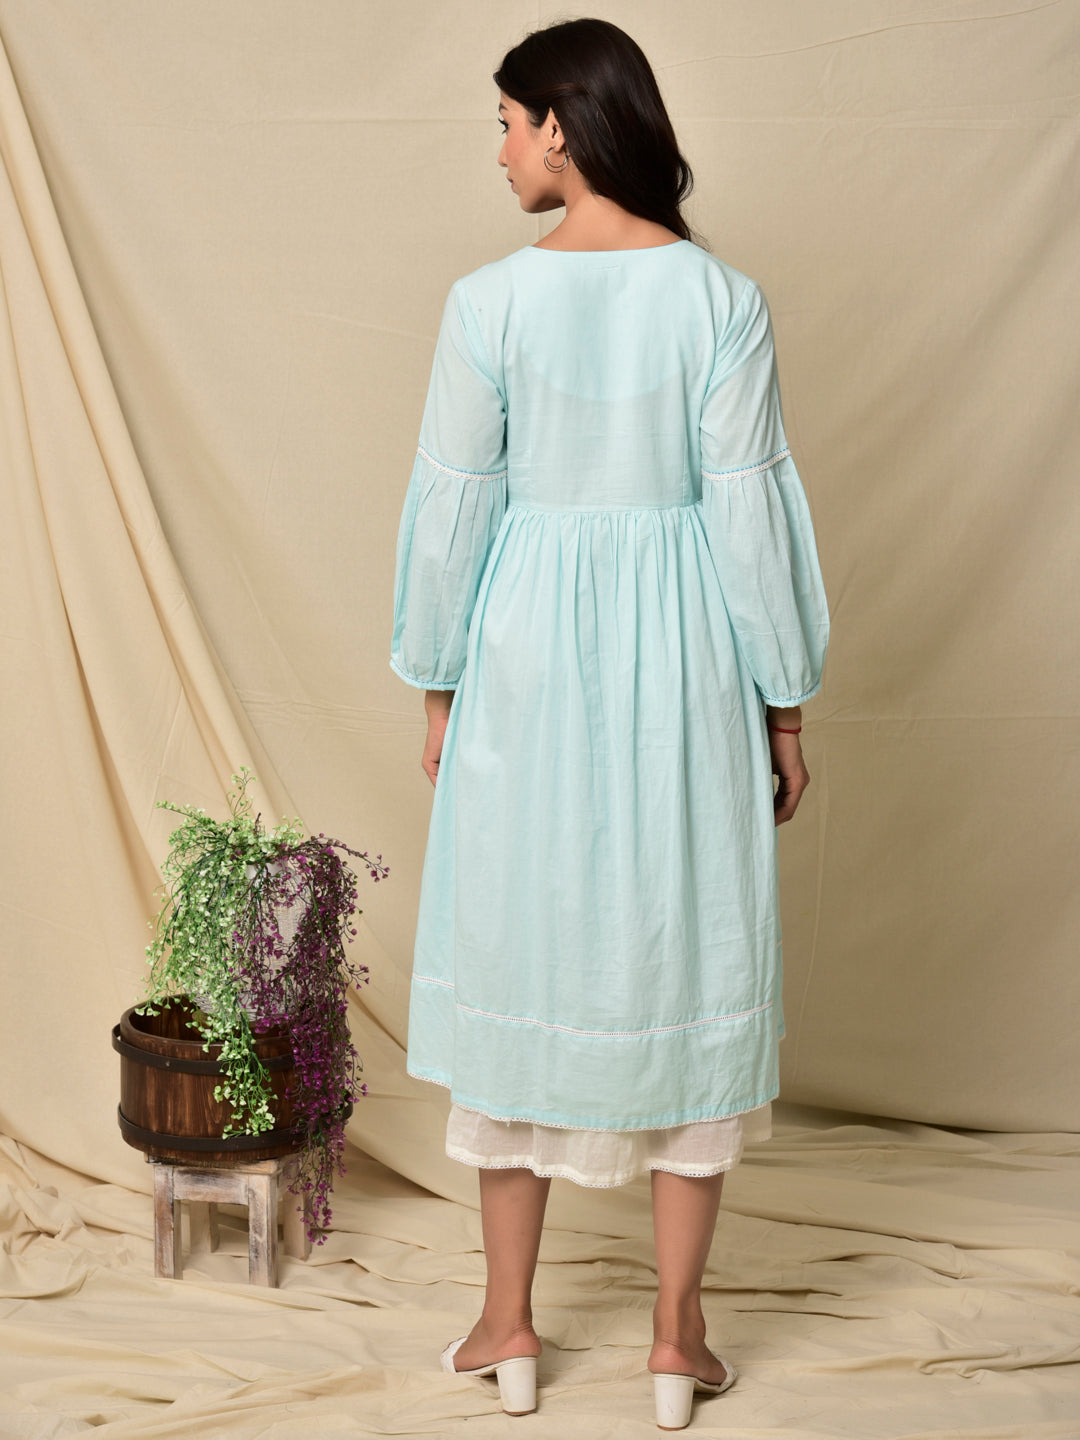 Cotton Shell Tuck Layered Dress in Aqua Blue